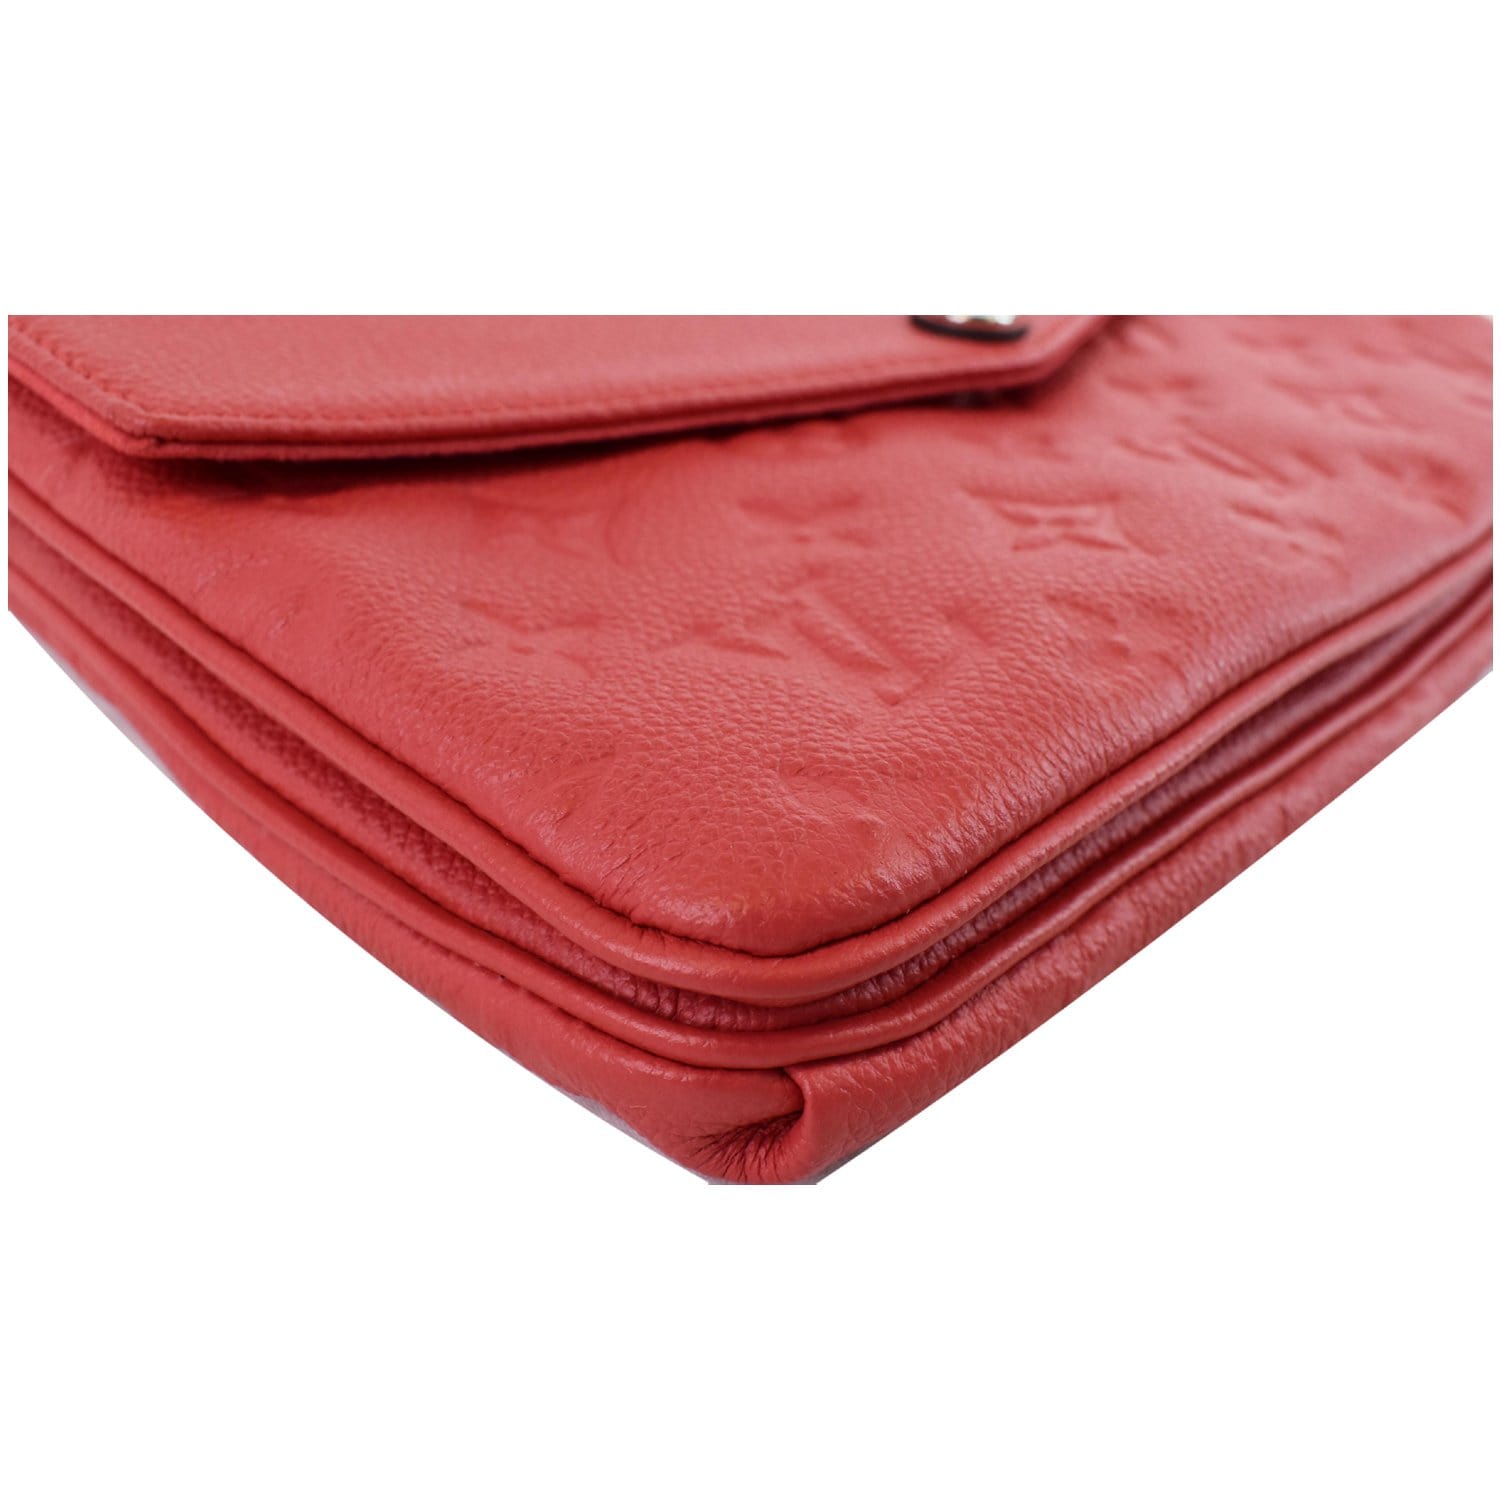 Louis Vuitton Pink Monogram Empreinte Leather Twice Bag Louis Vuitton